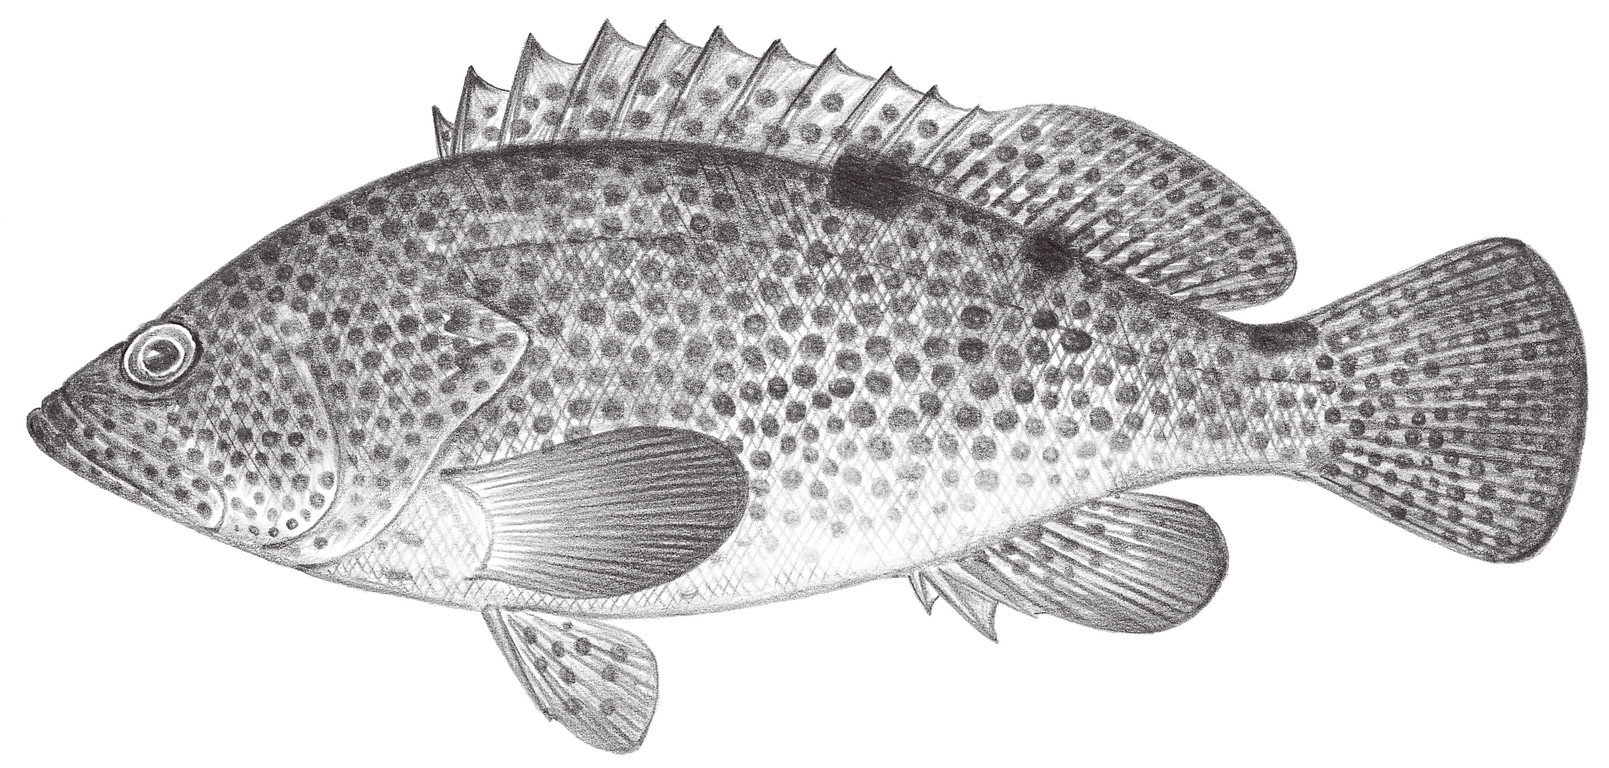 1049.	三斑石斑魚 Epinephelus trimaculatus (Valenciennes, 1828)